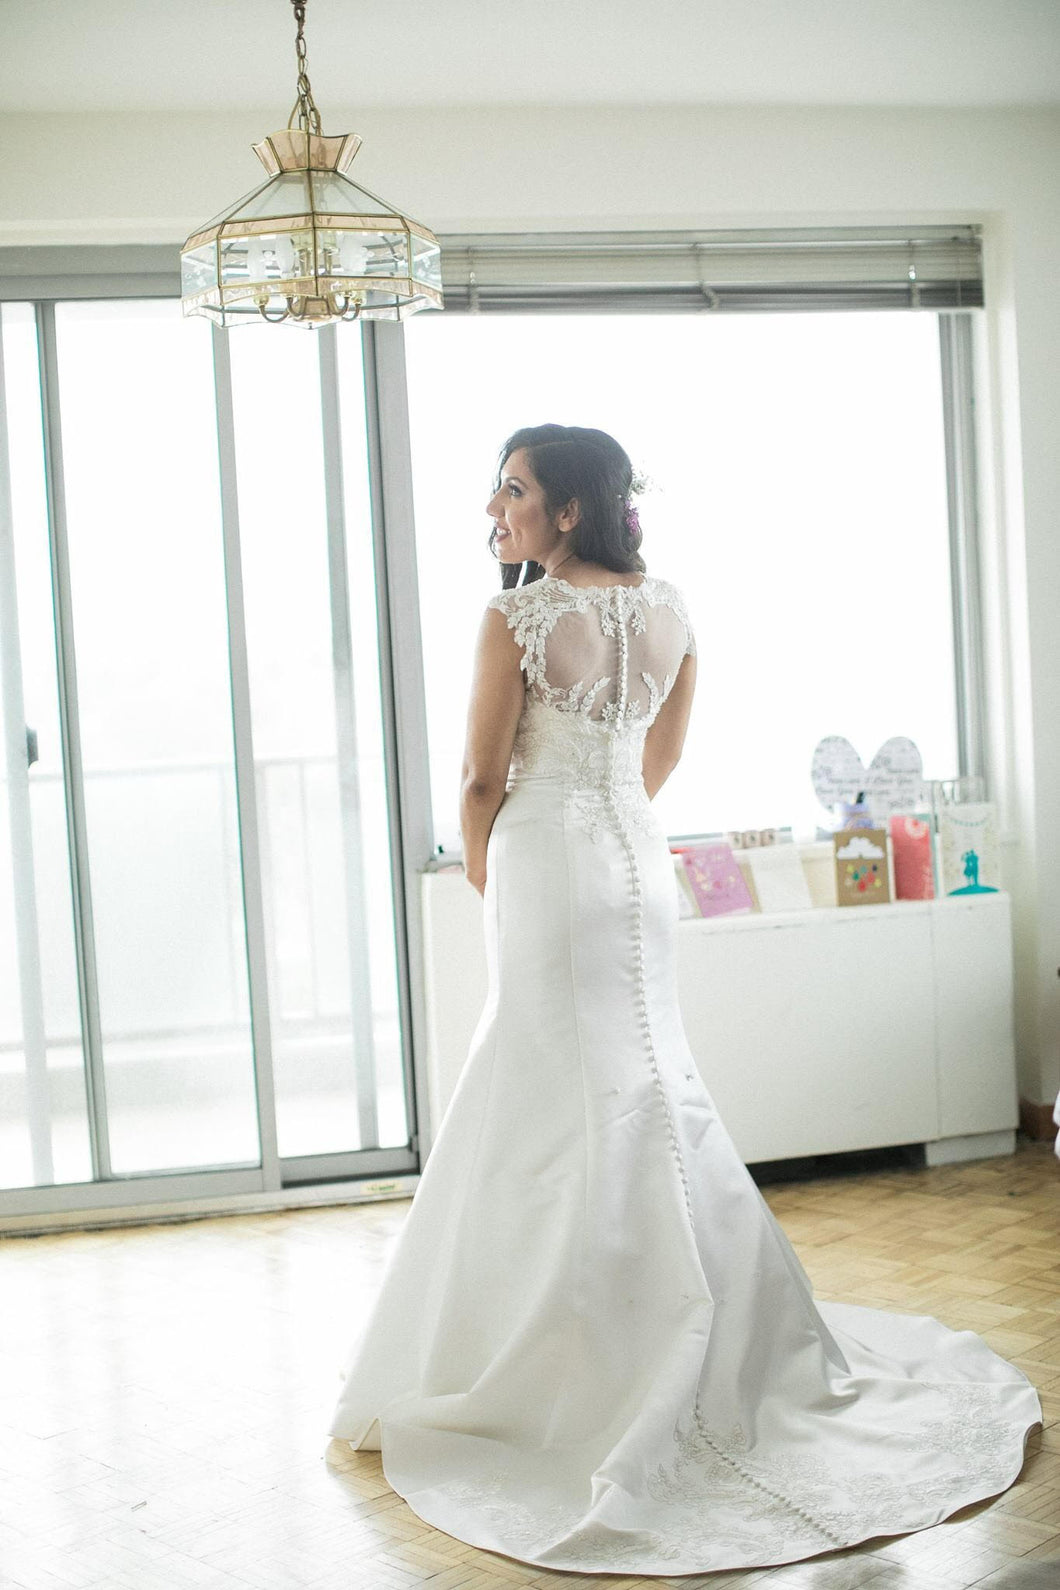 Jewel 'Illusion Neck' size 6 used wedding dress back view on bride